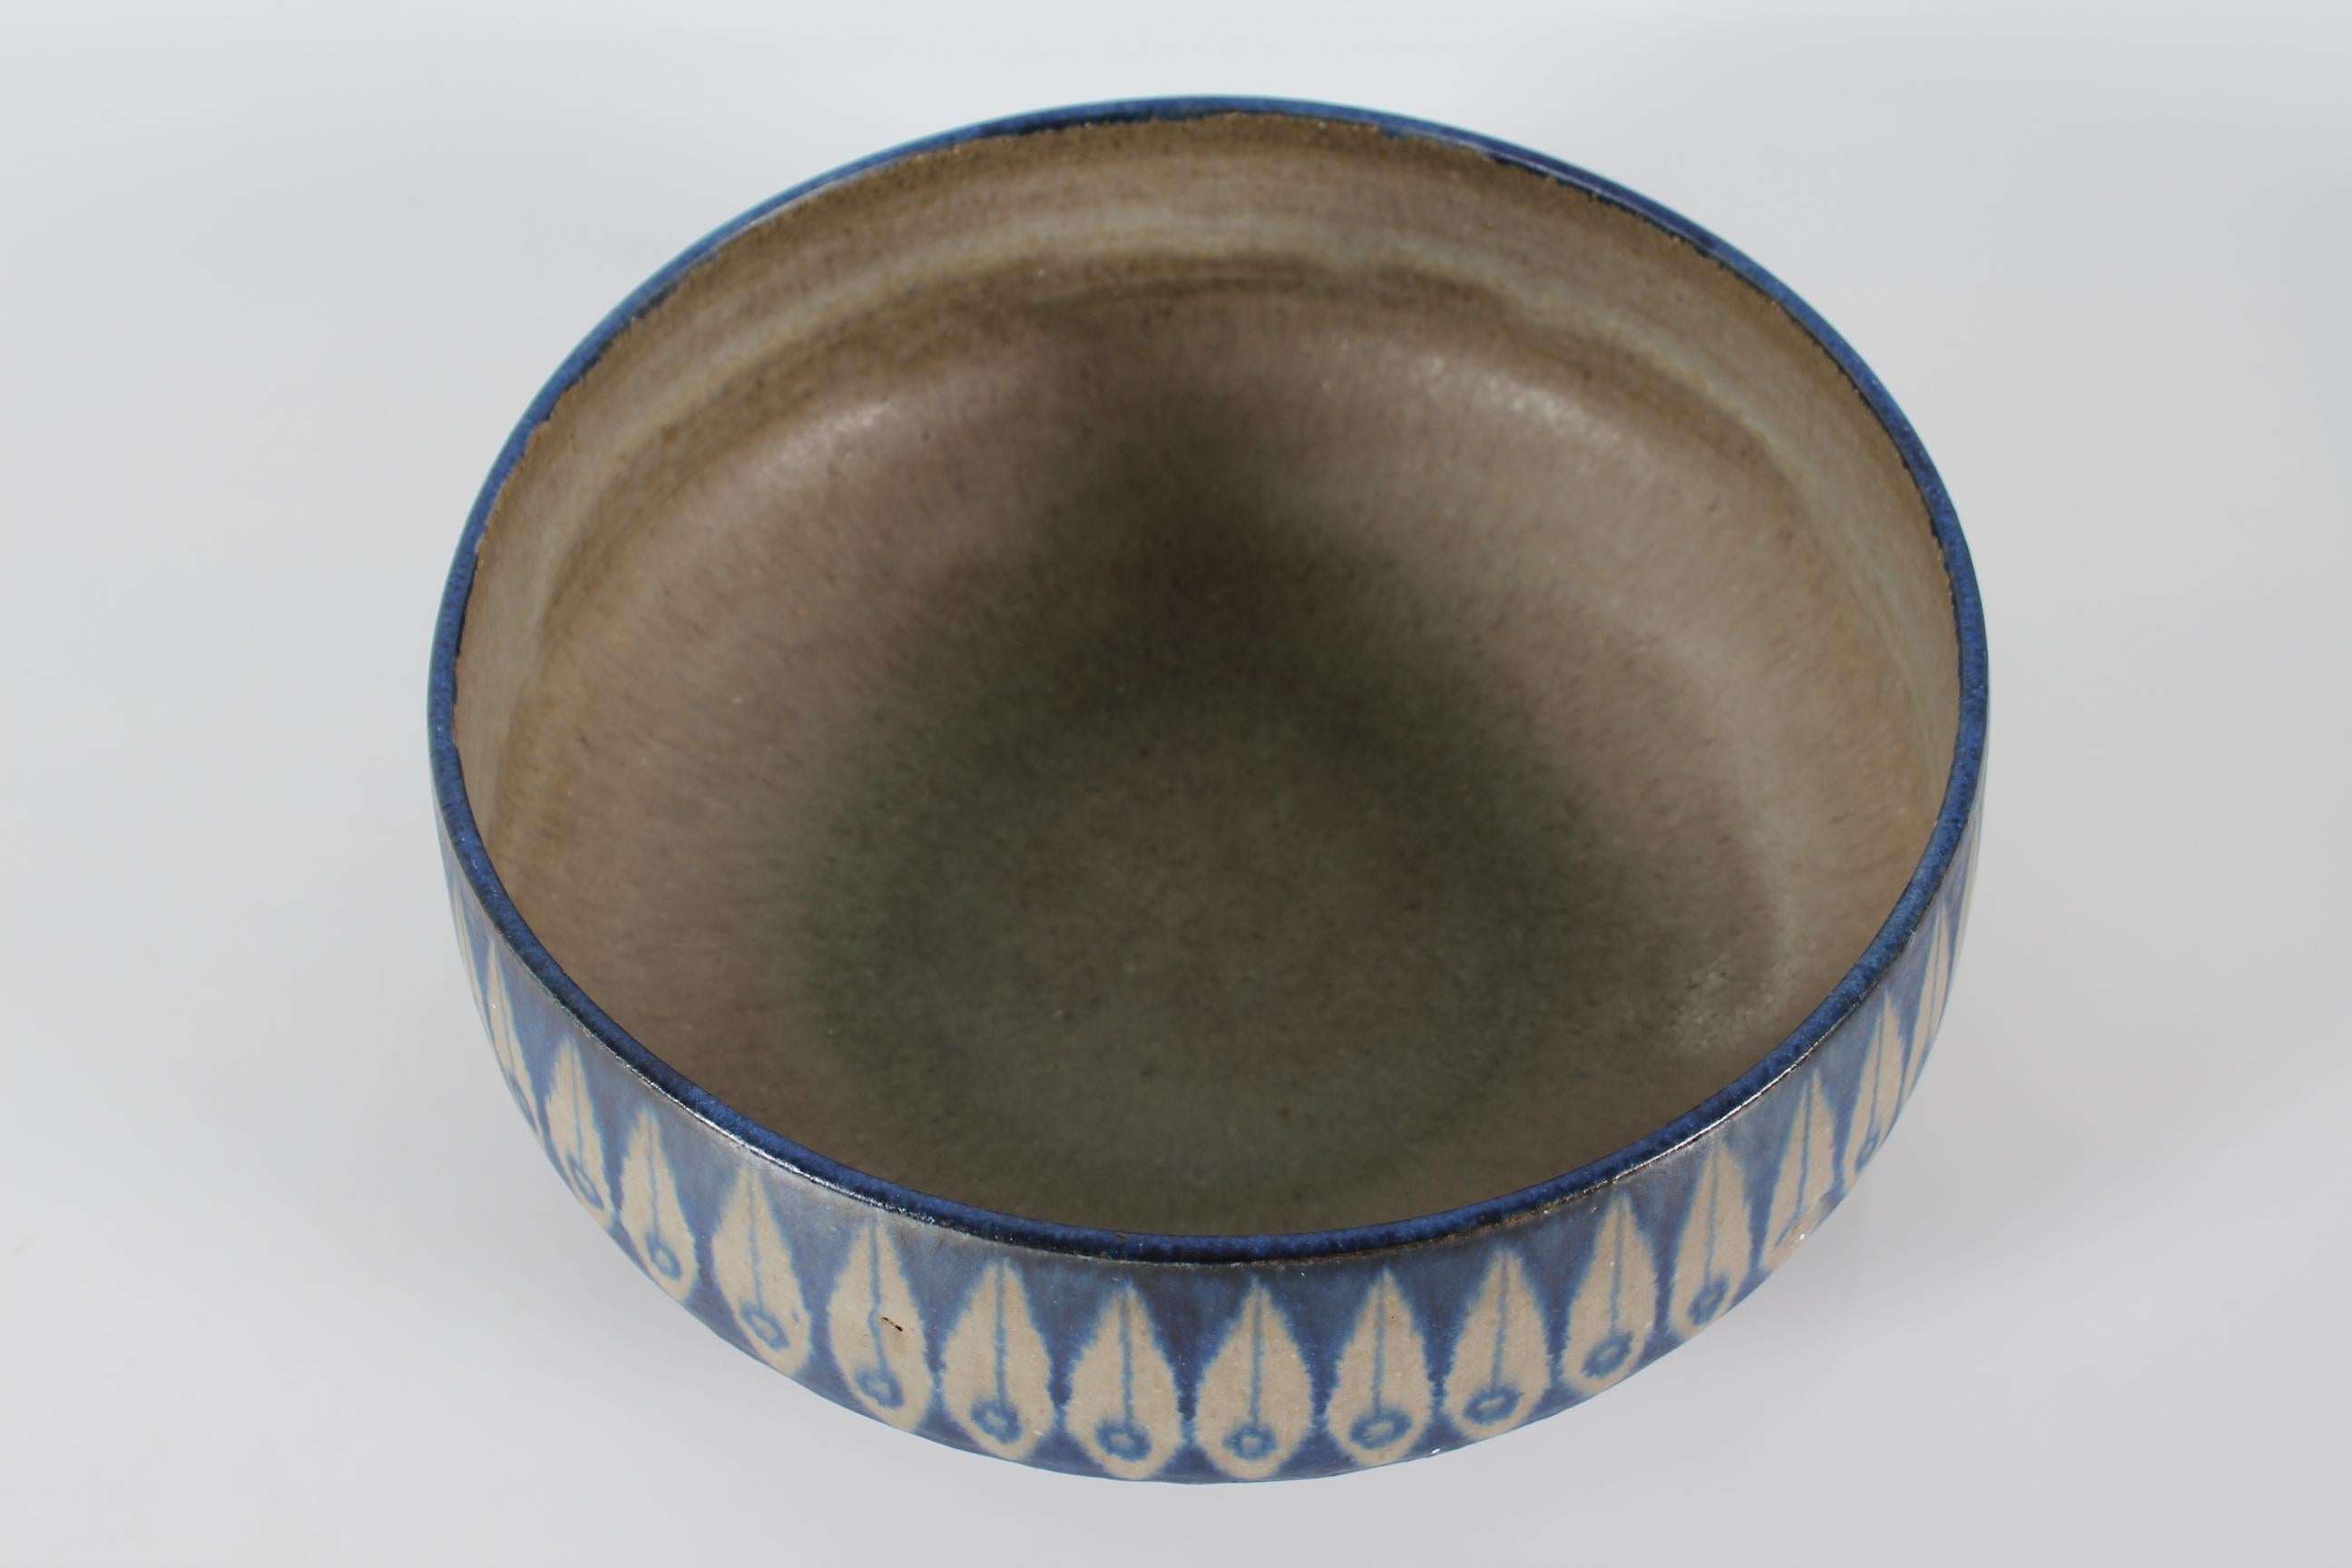 Scandinavian Modern Large Thomas Toft Decorative Bowl, Blue and Grey Mid-century Danish Ceramic  For Sale